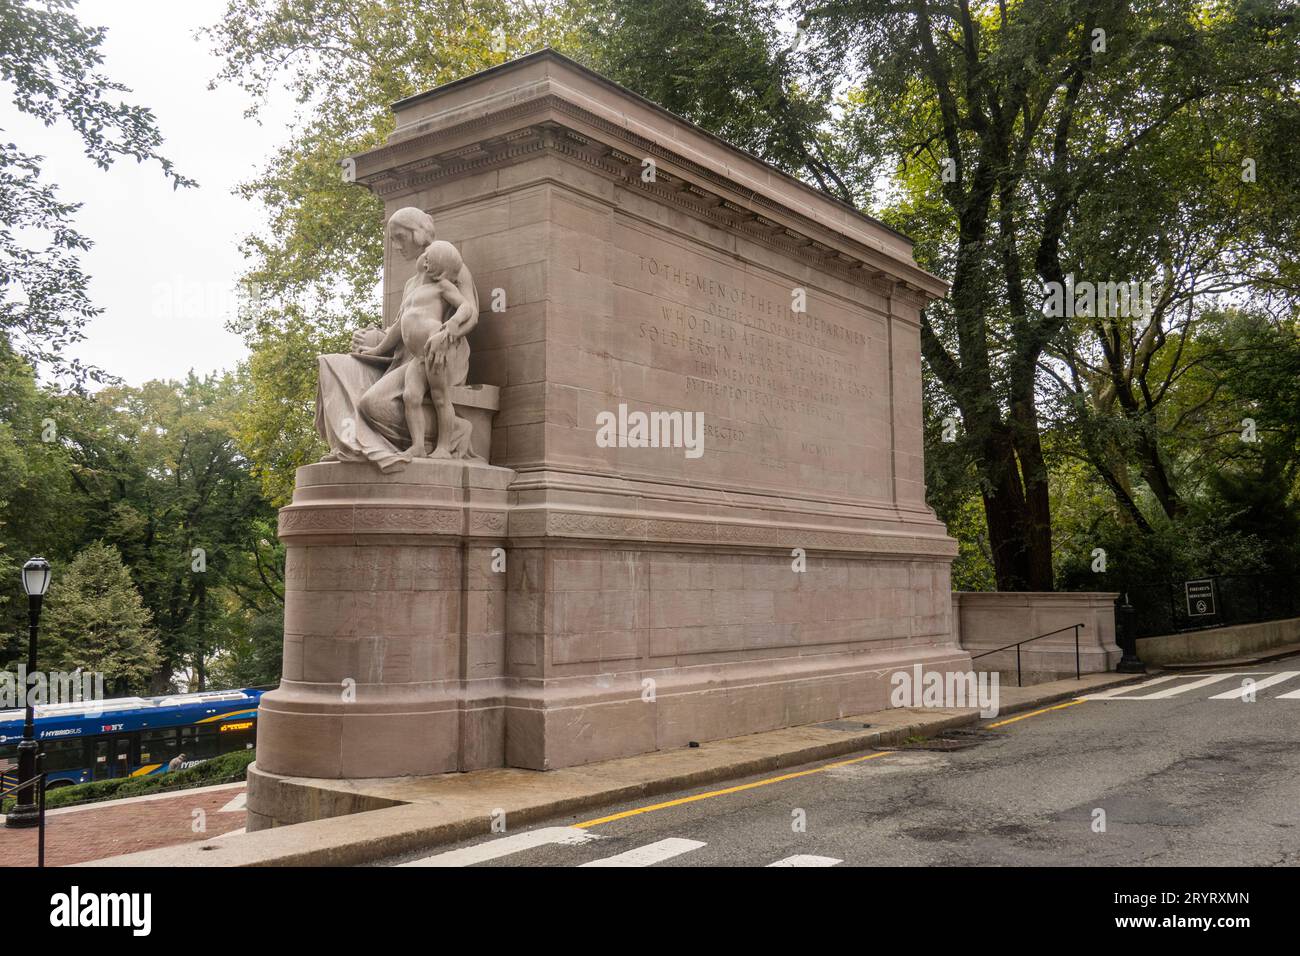 Firemen's memorial in Riverside park along Riverside drive on the upper westside of Manhattan NYC Stock Photo